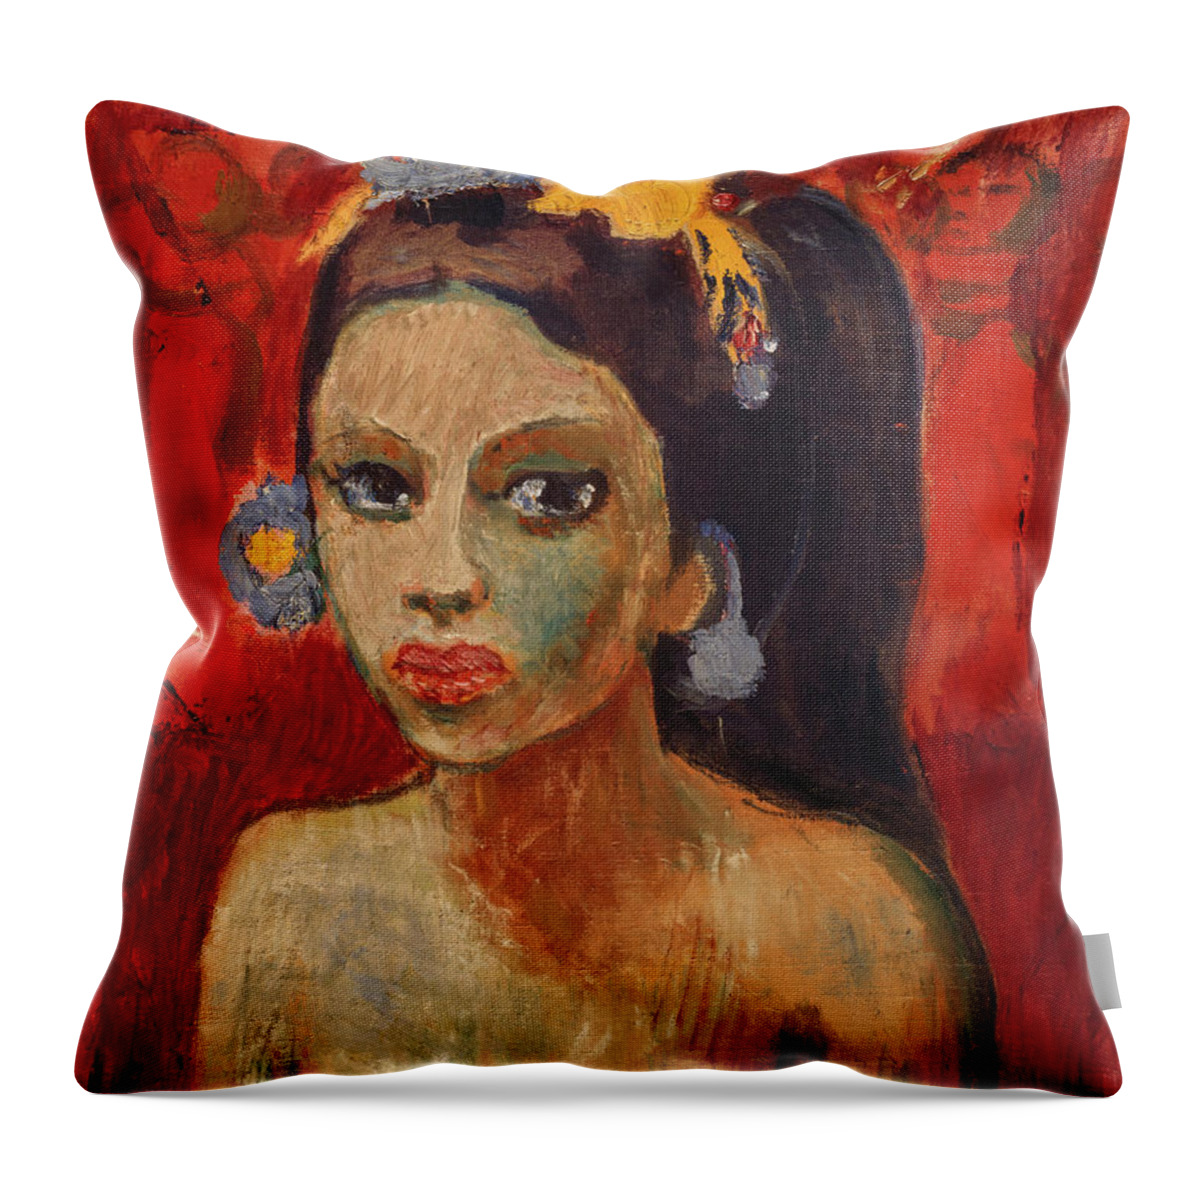 Robert Genin Throw Pillow featuring the painting Balinesin by Robert Genin